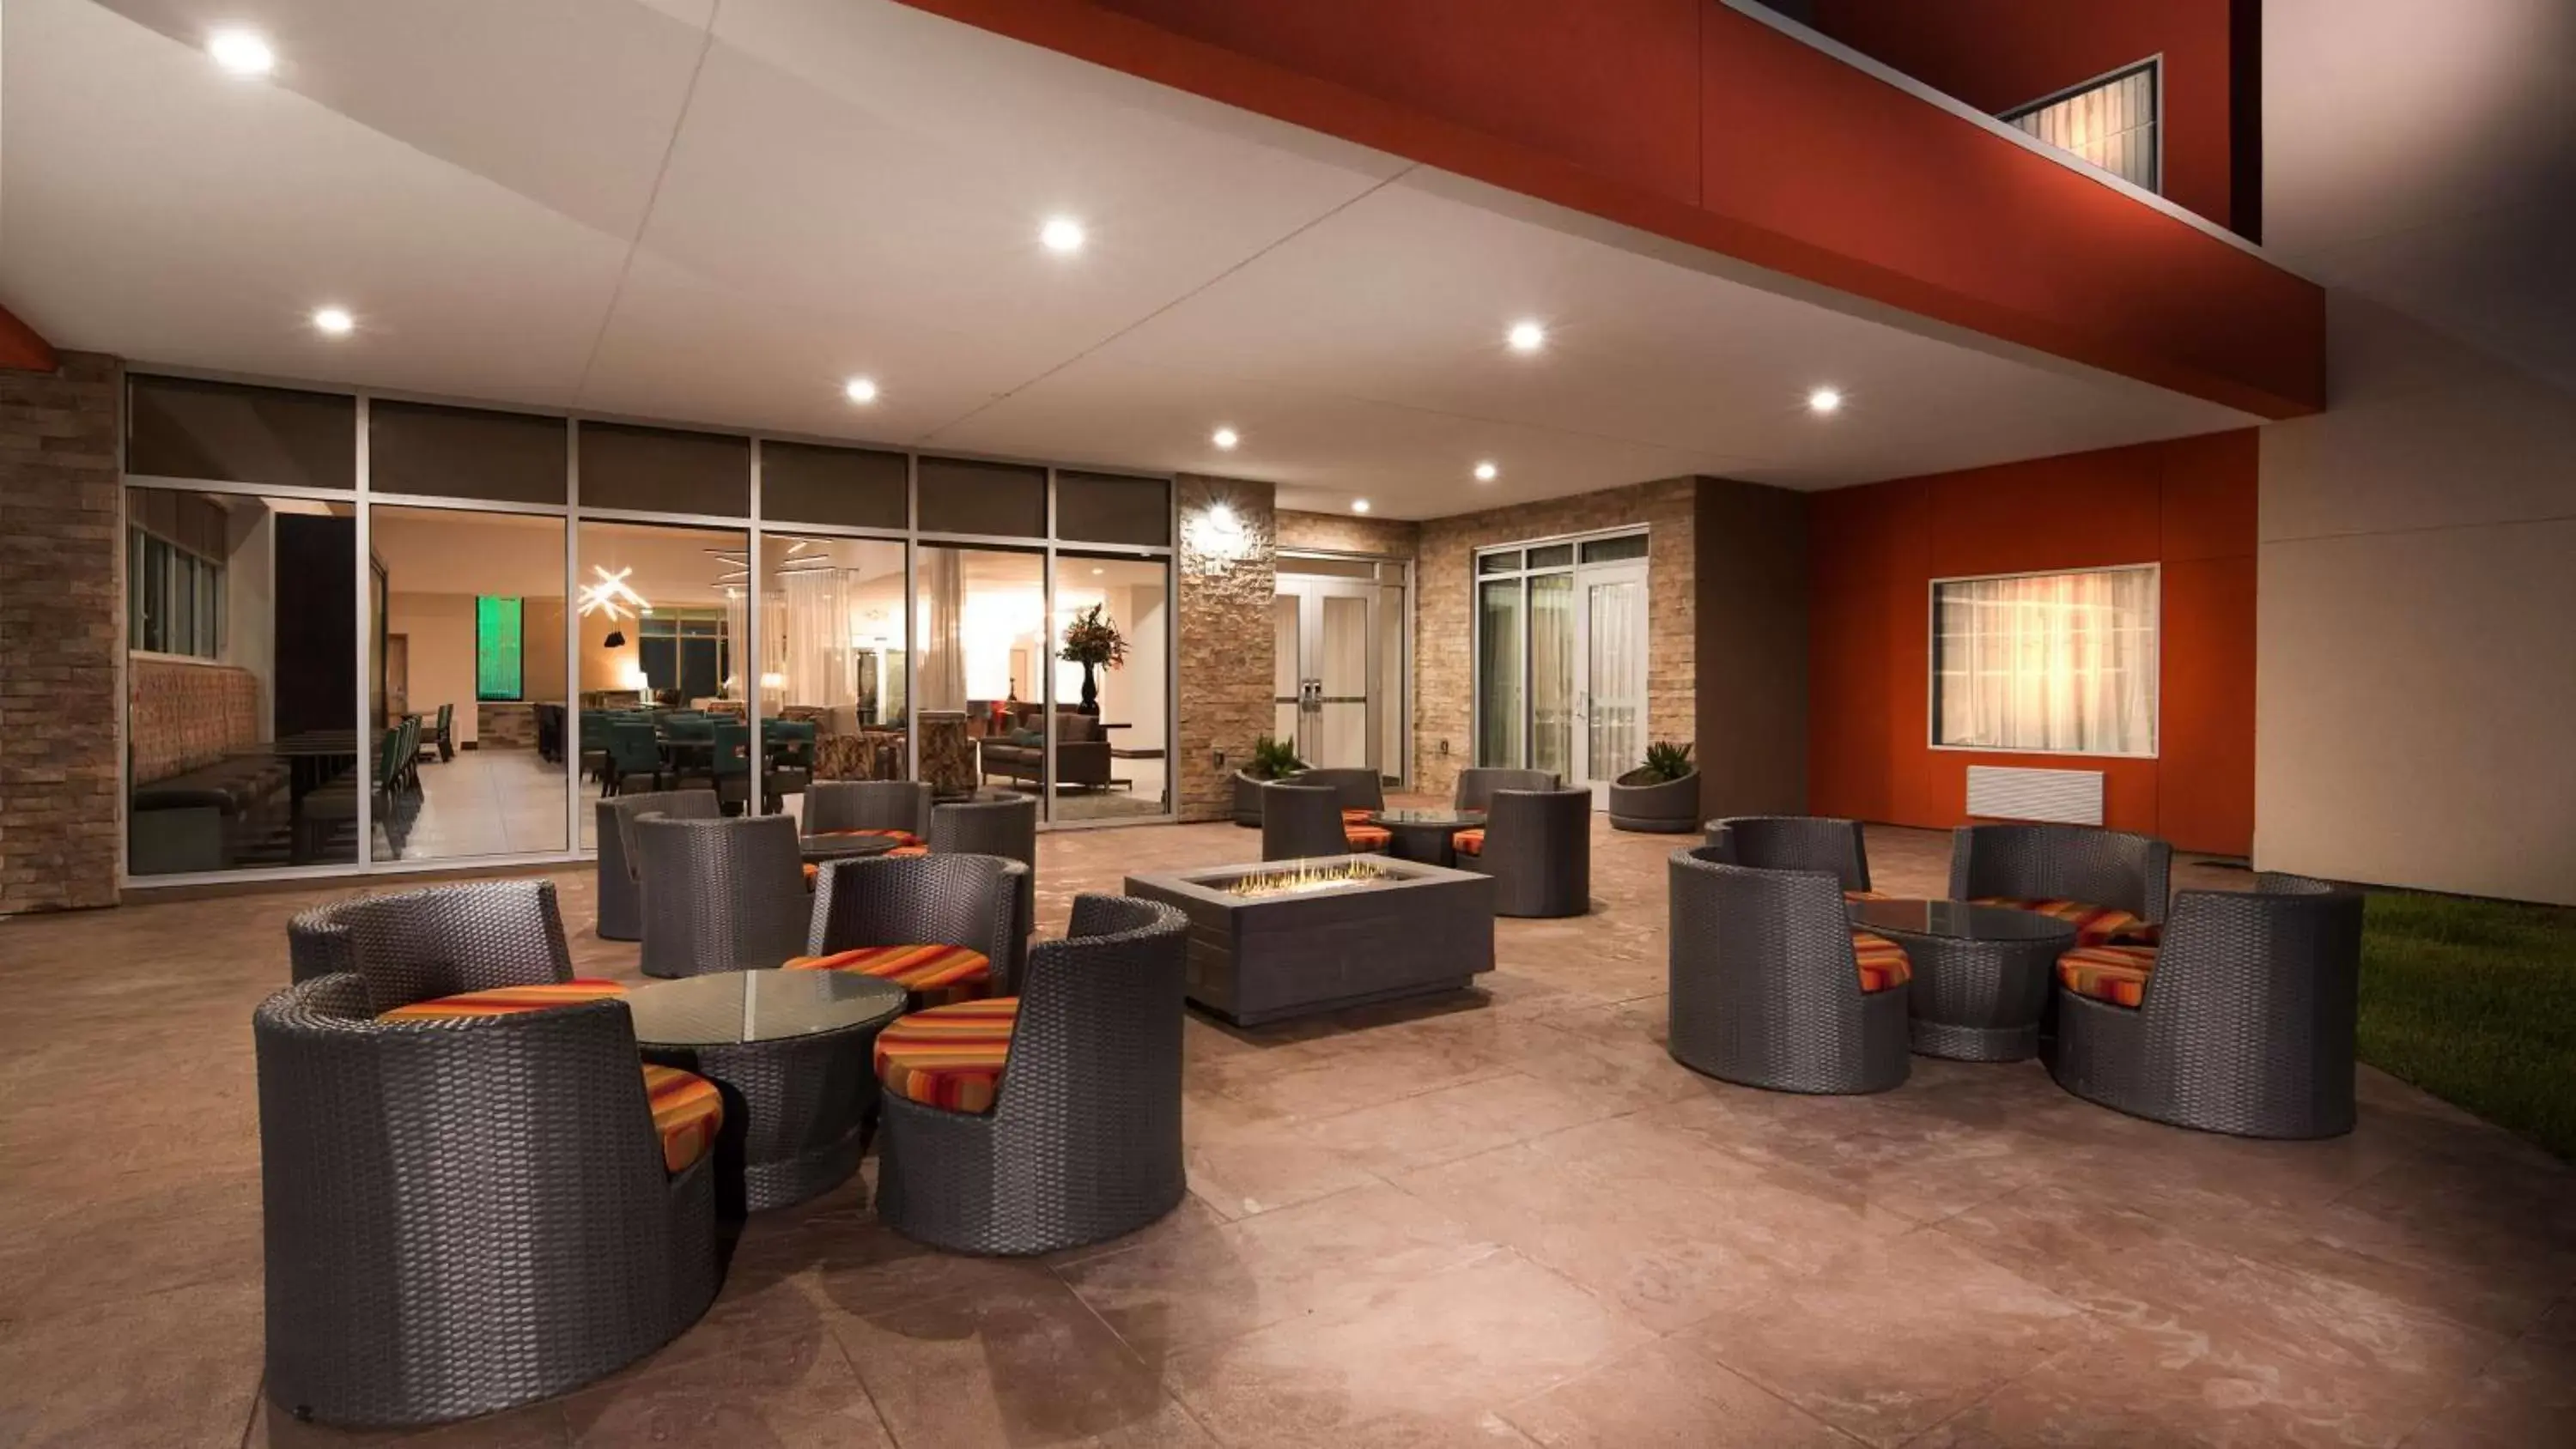 On site, Lounge/Bar in Best Western Executive Residency IH-37 Corpus Christi